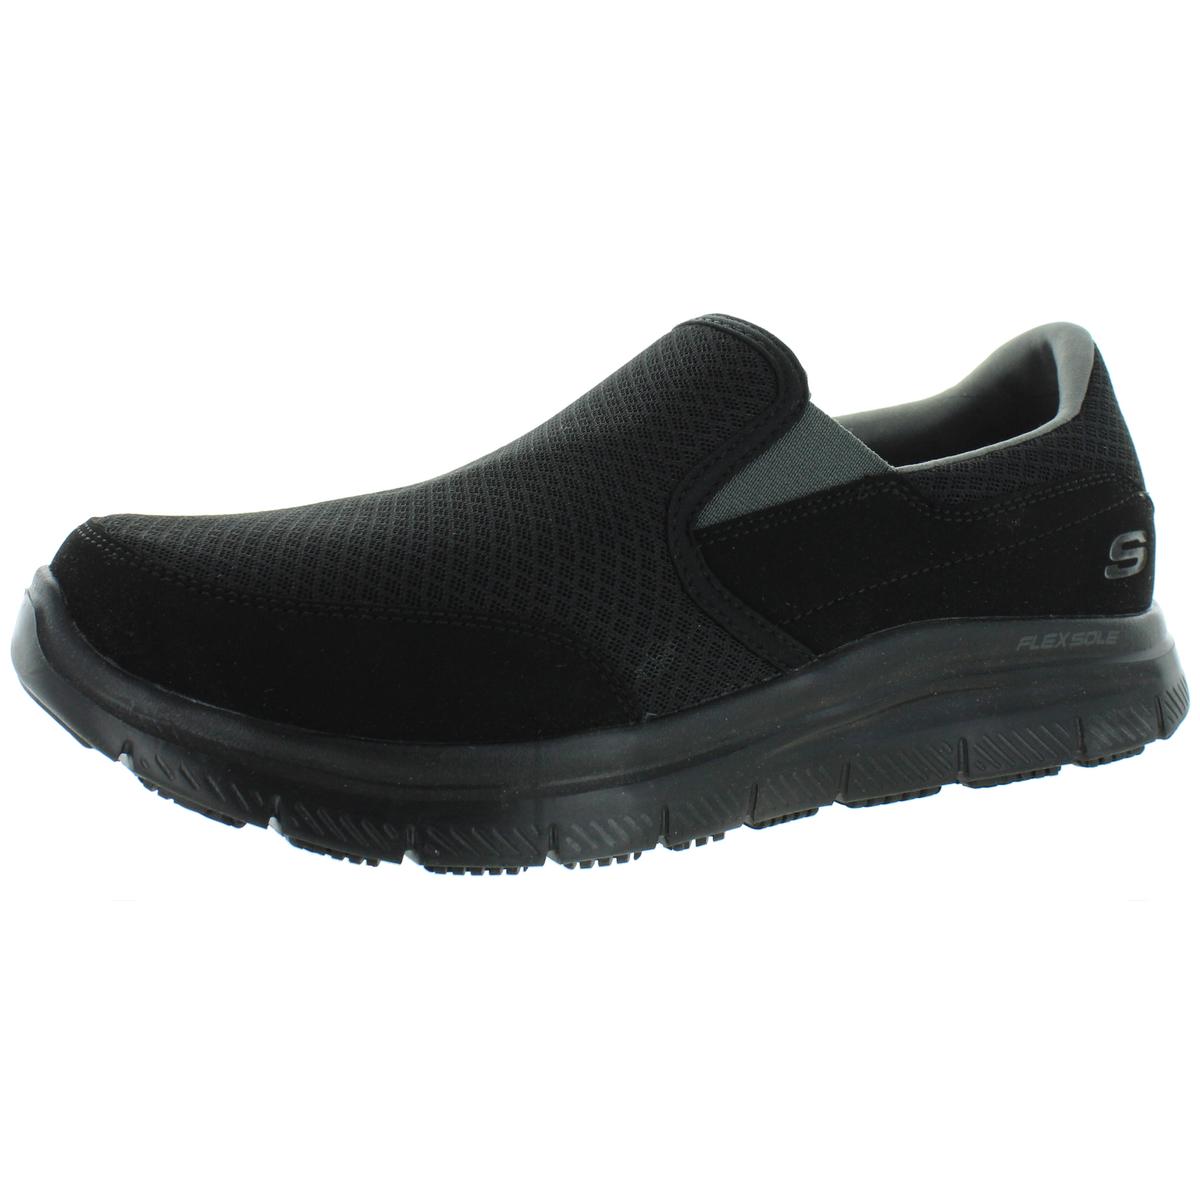 Skechers Mens Black Slip Resistant Casual Shoes 13 Wide (E) BHFO 7462 ...